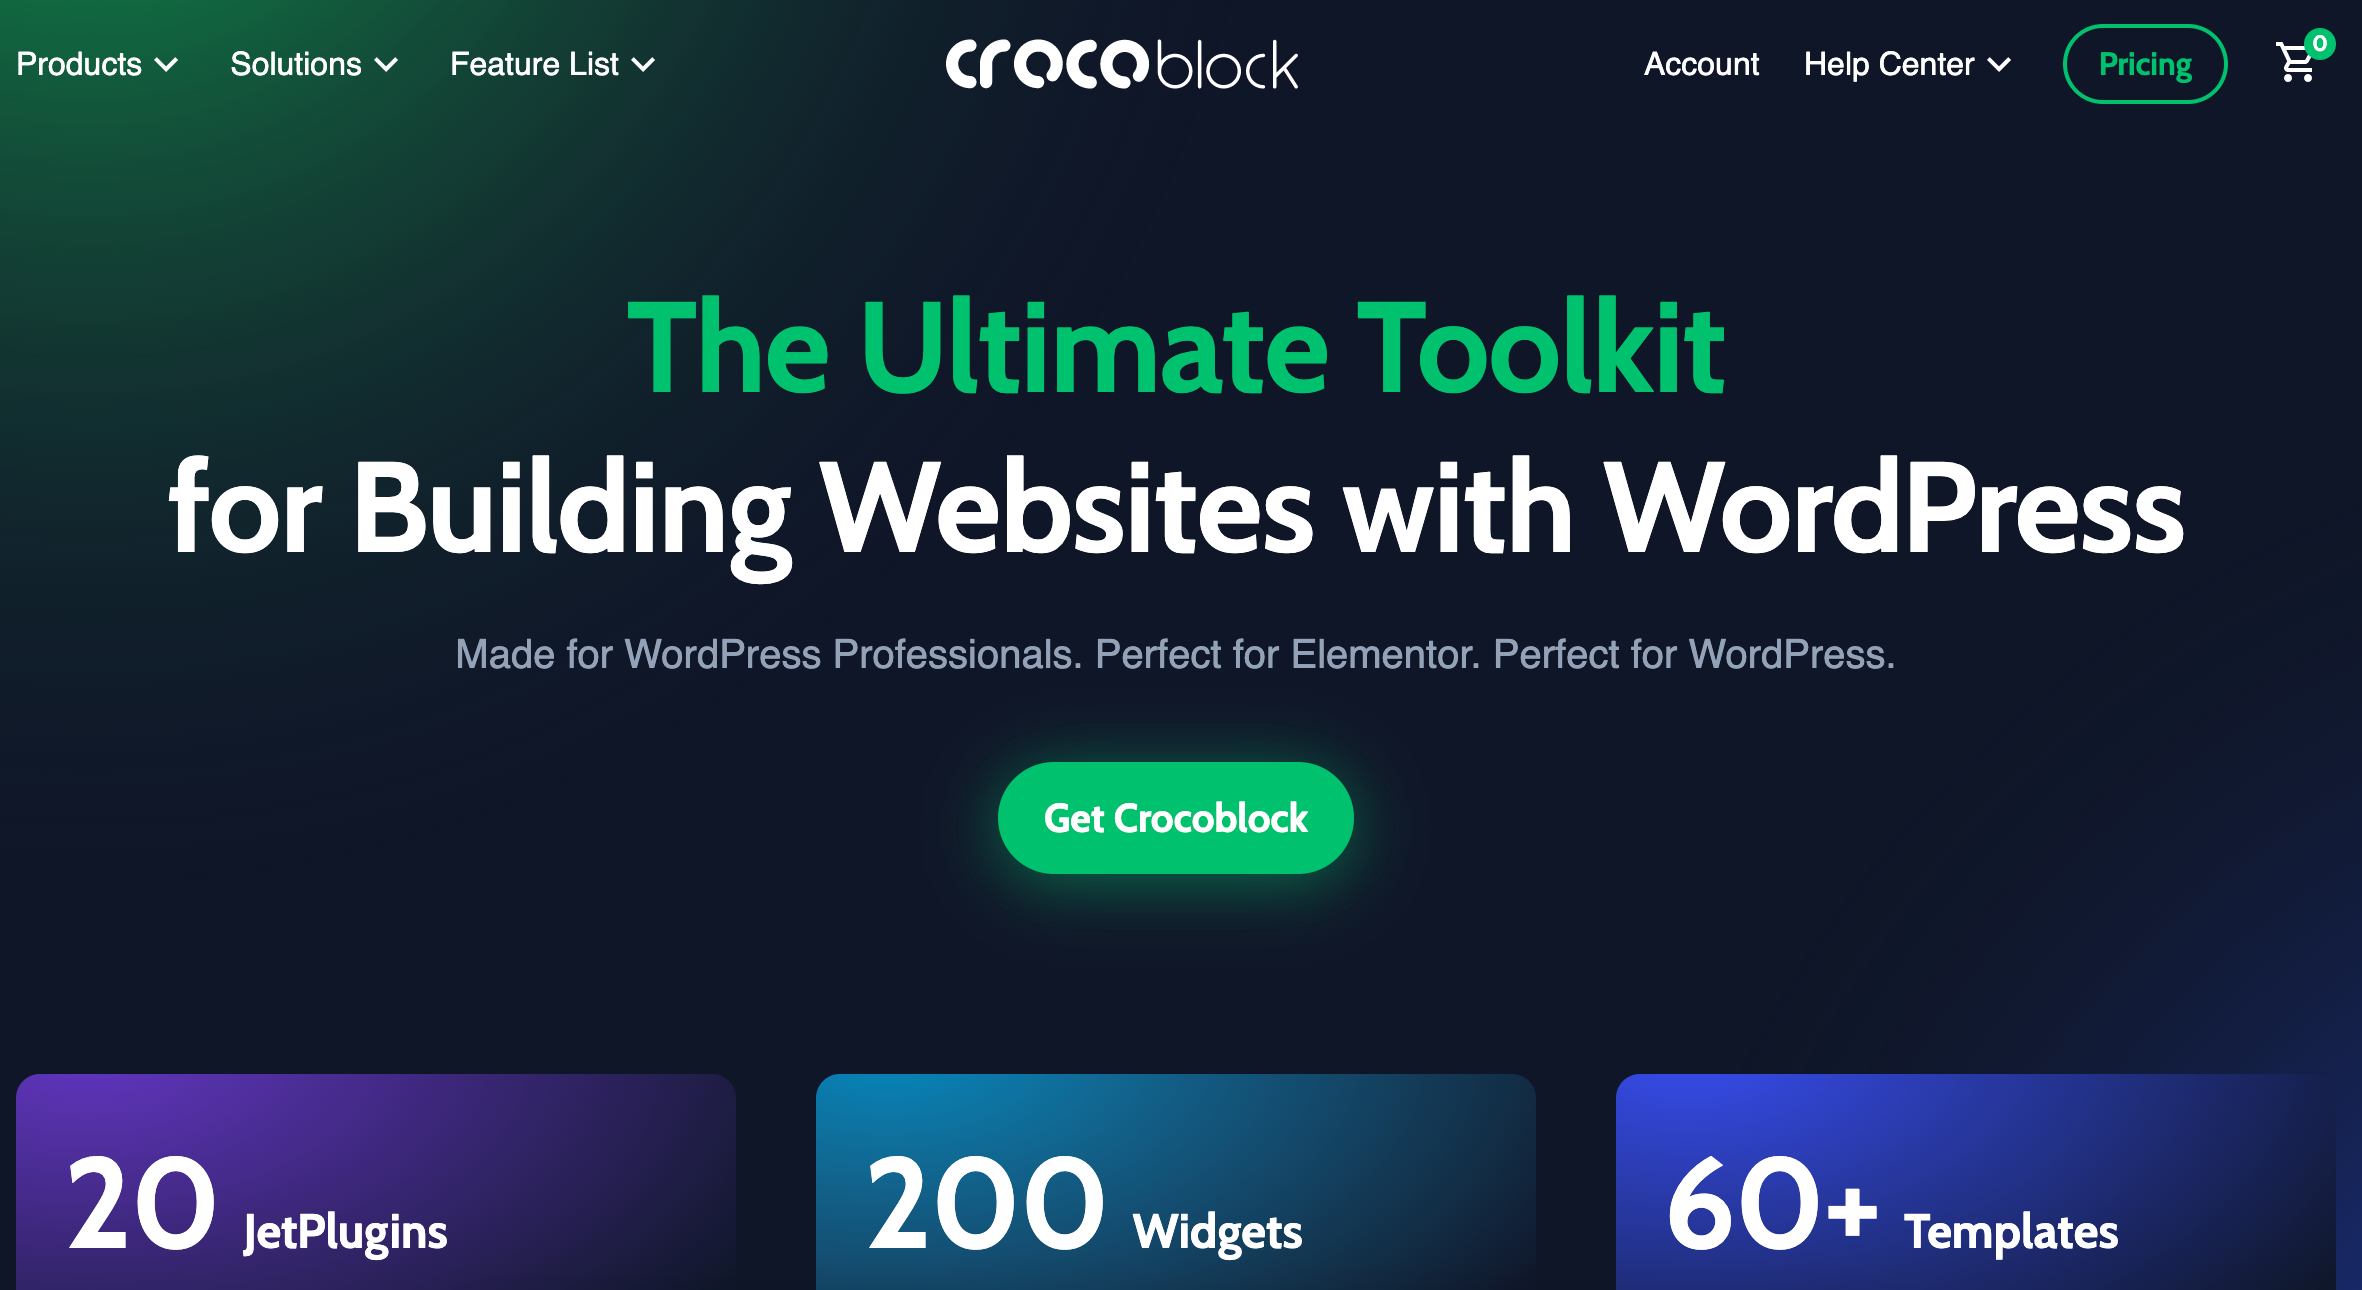 CrocCrocoblockoblock